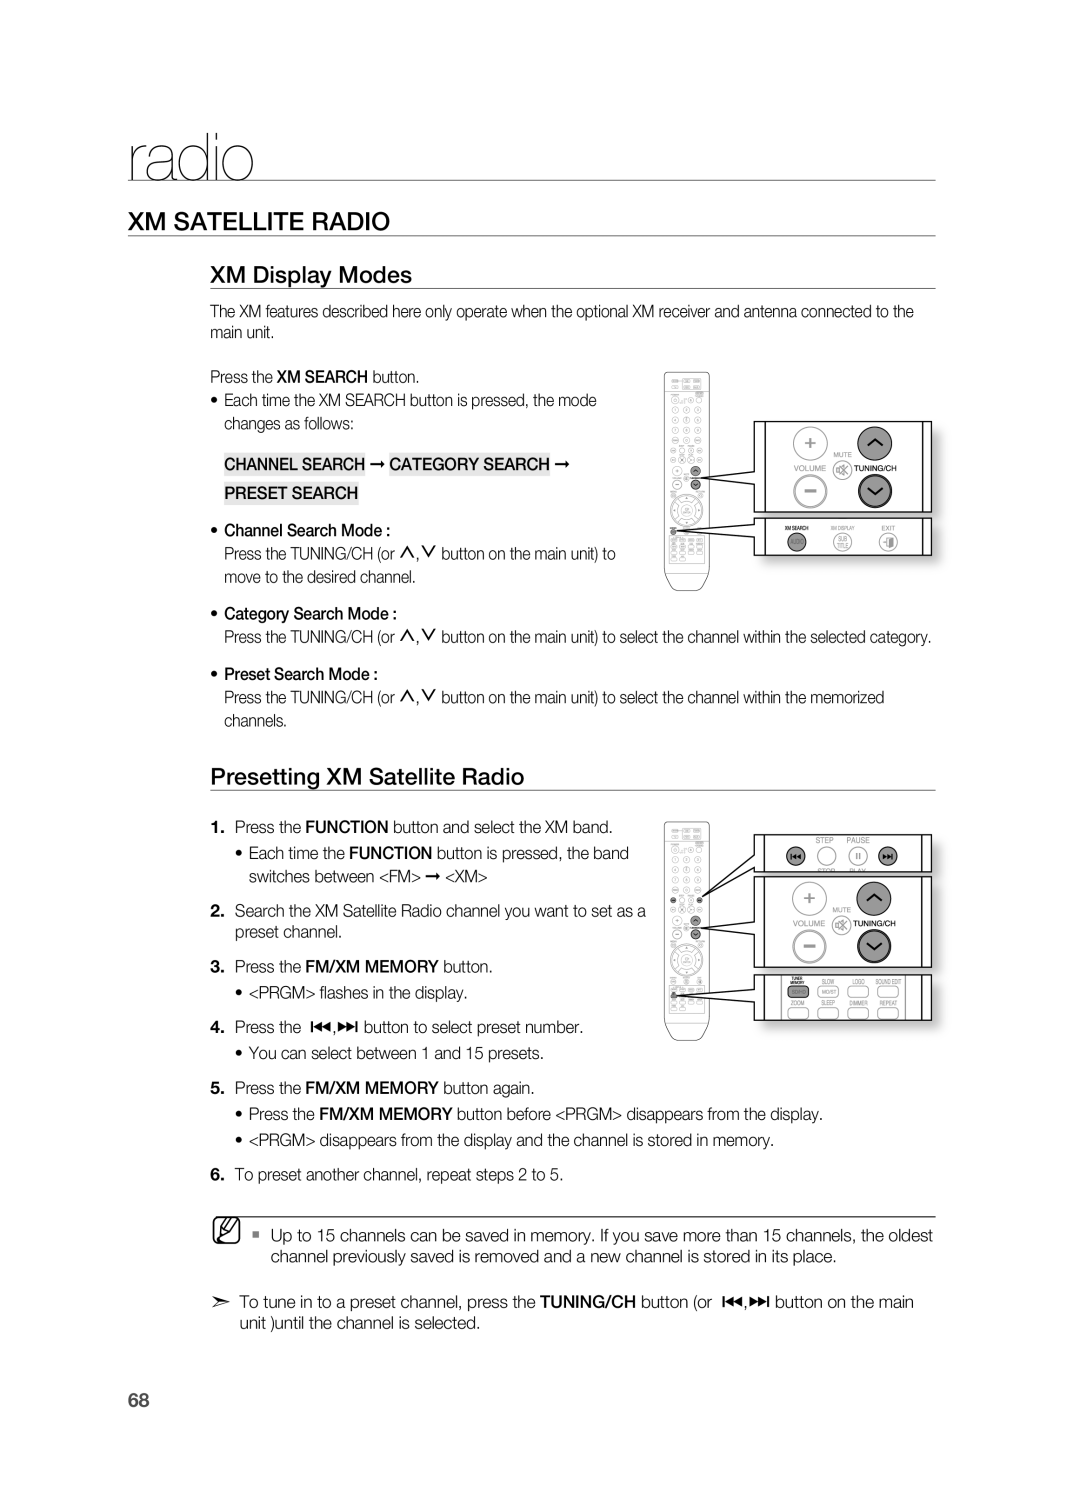 Samsung HT-Z510 manual XM SATELLITE rADIO, XM Display Modes, Presetting XM Satellite radio 